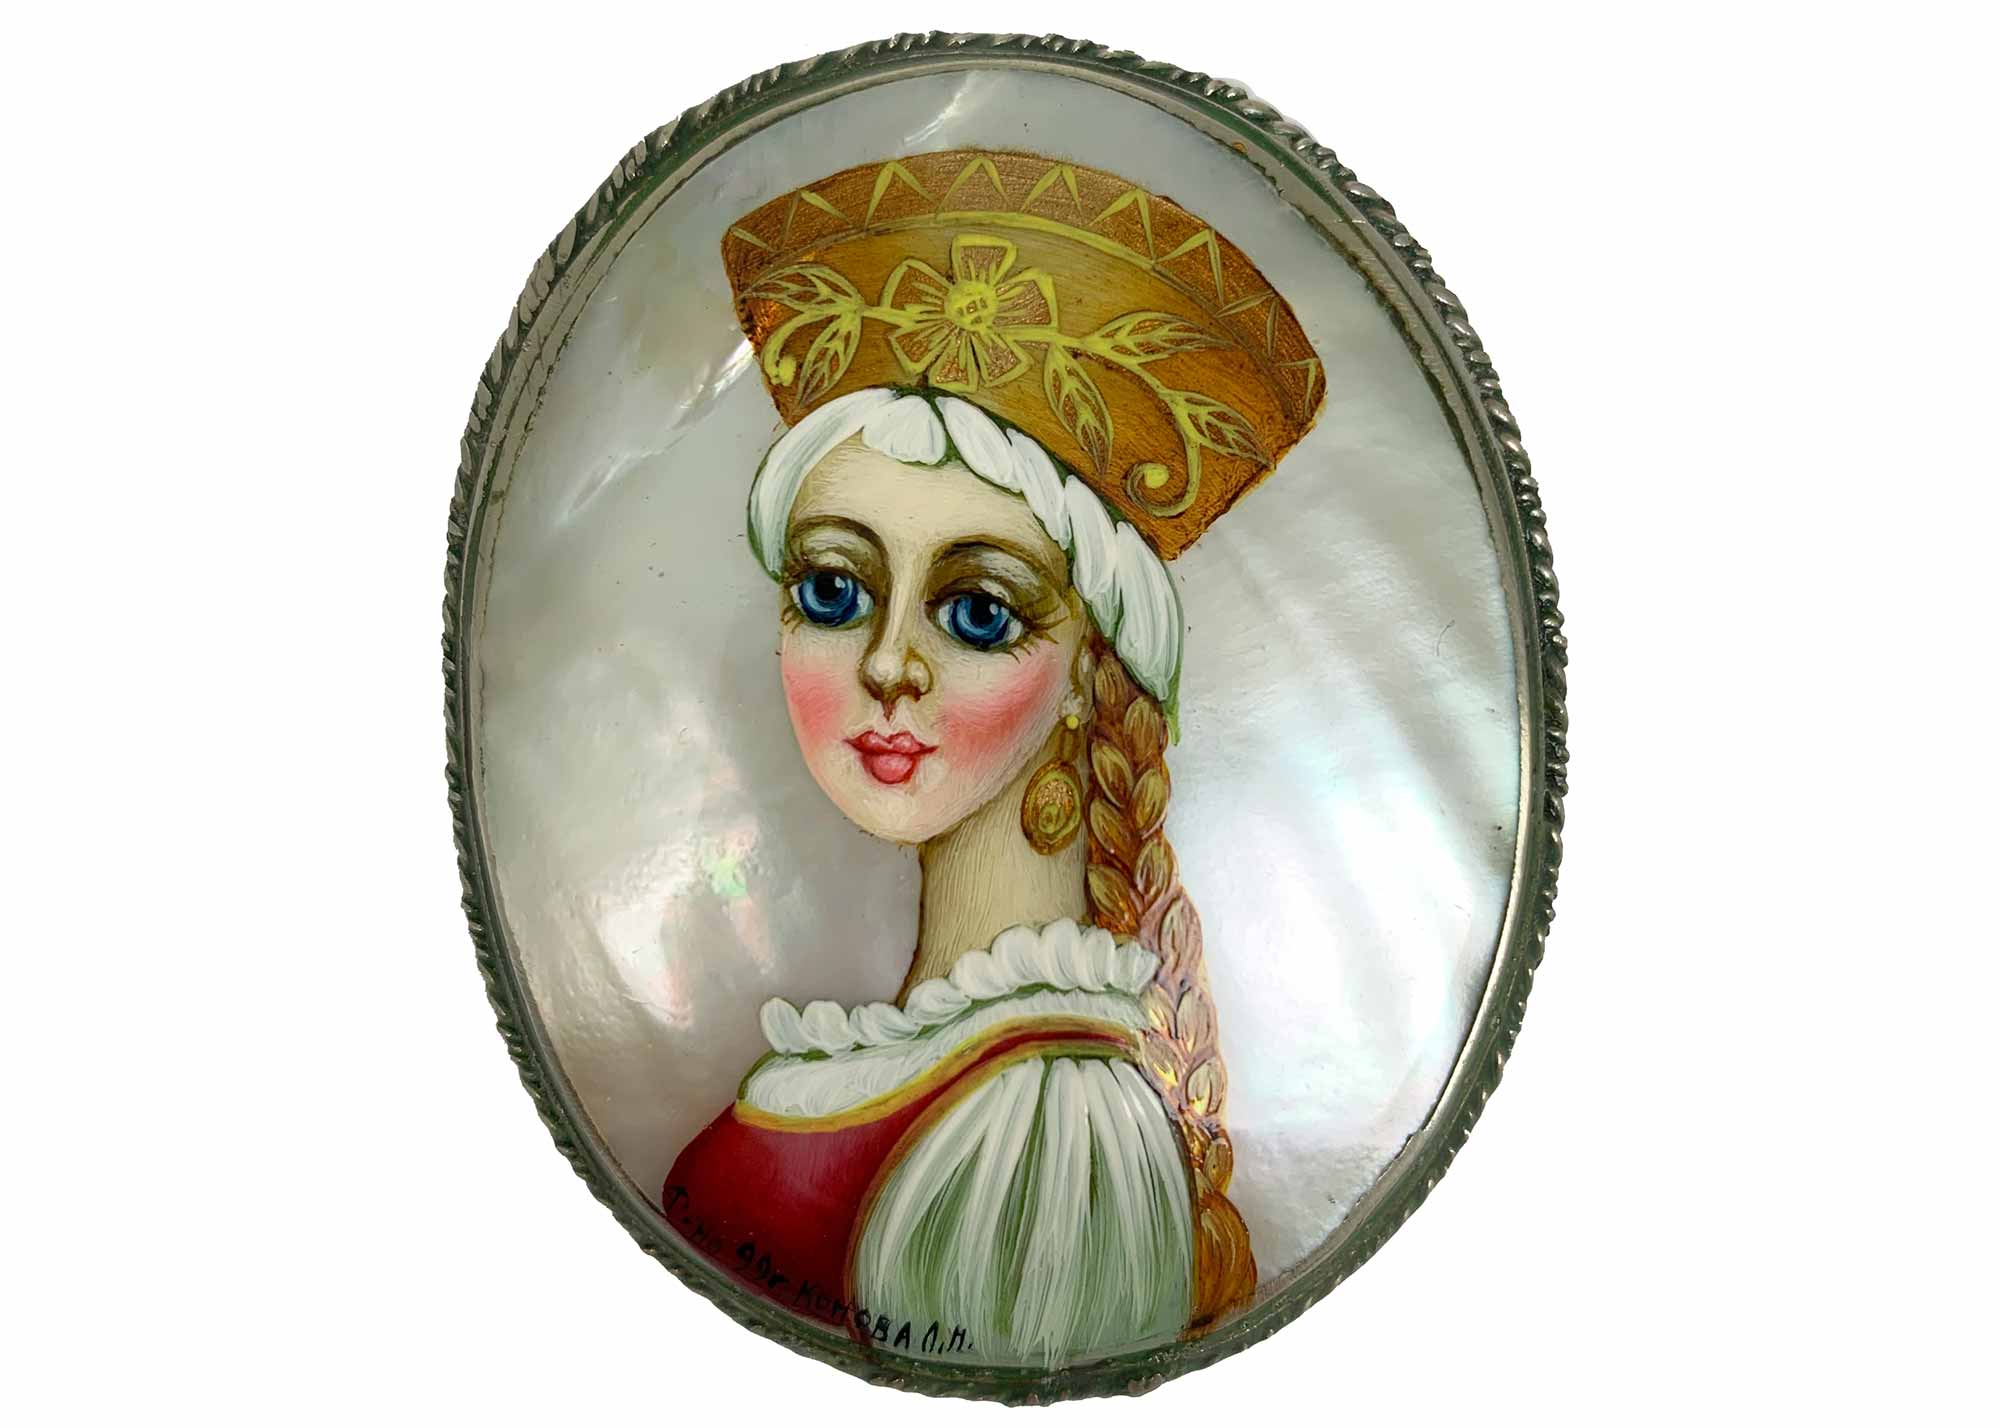 Buy Vintage Mother of Pearl Portrait Brooch Oxana at GoldenCockerel.com